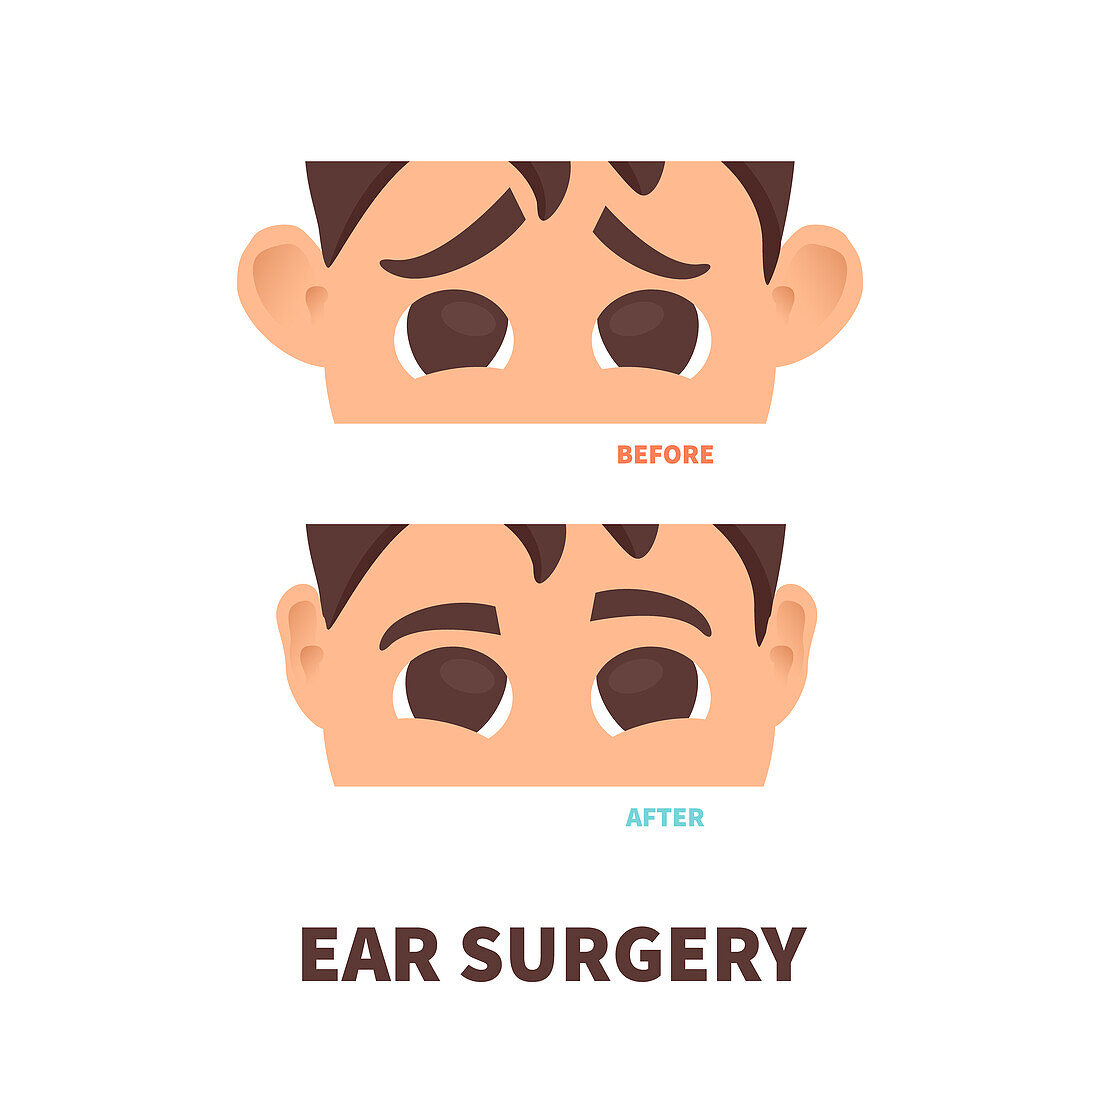 Ear surgery, conceptual illustration